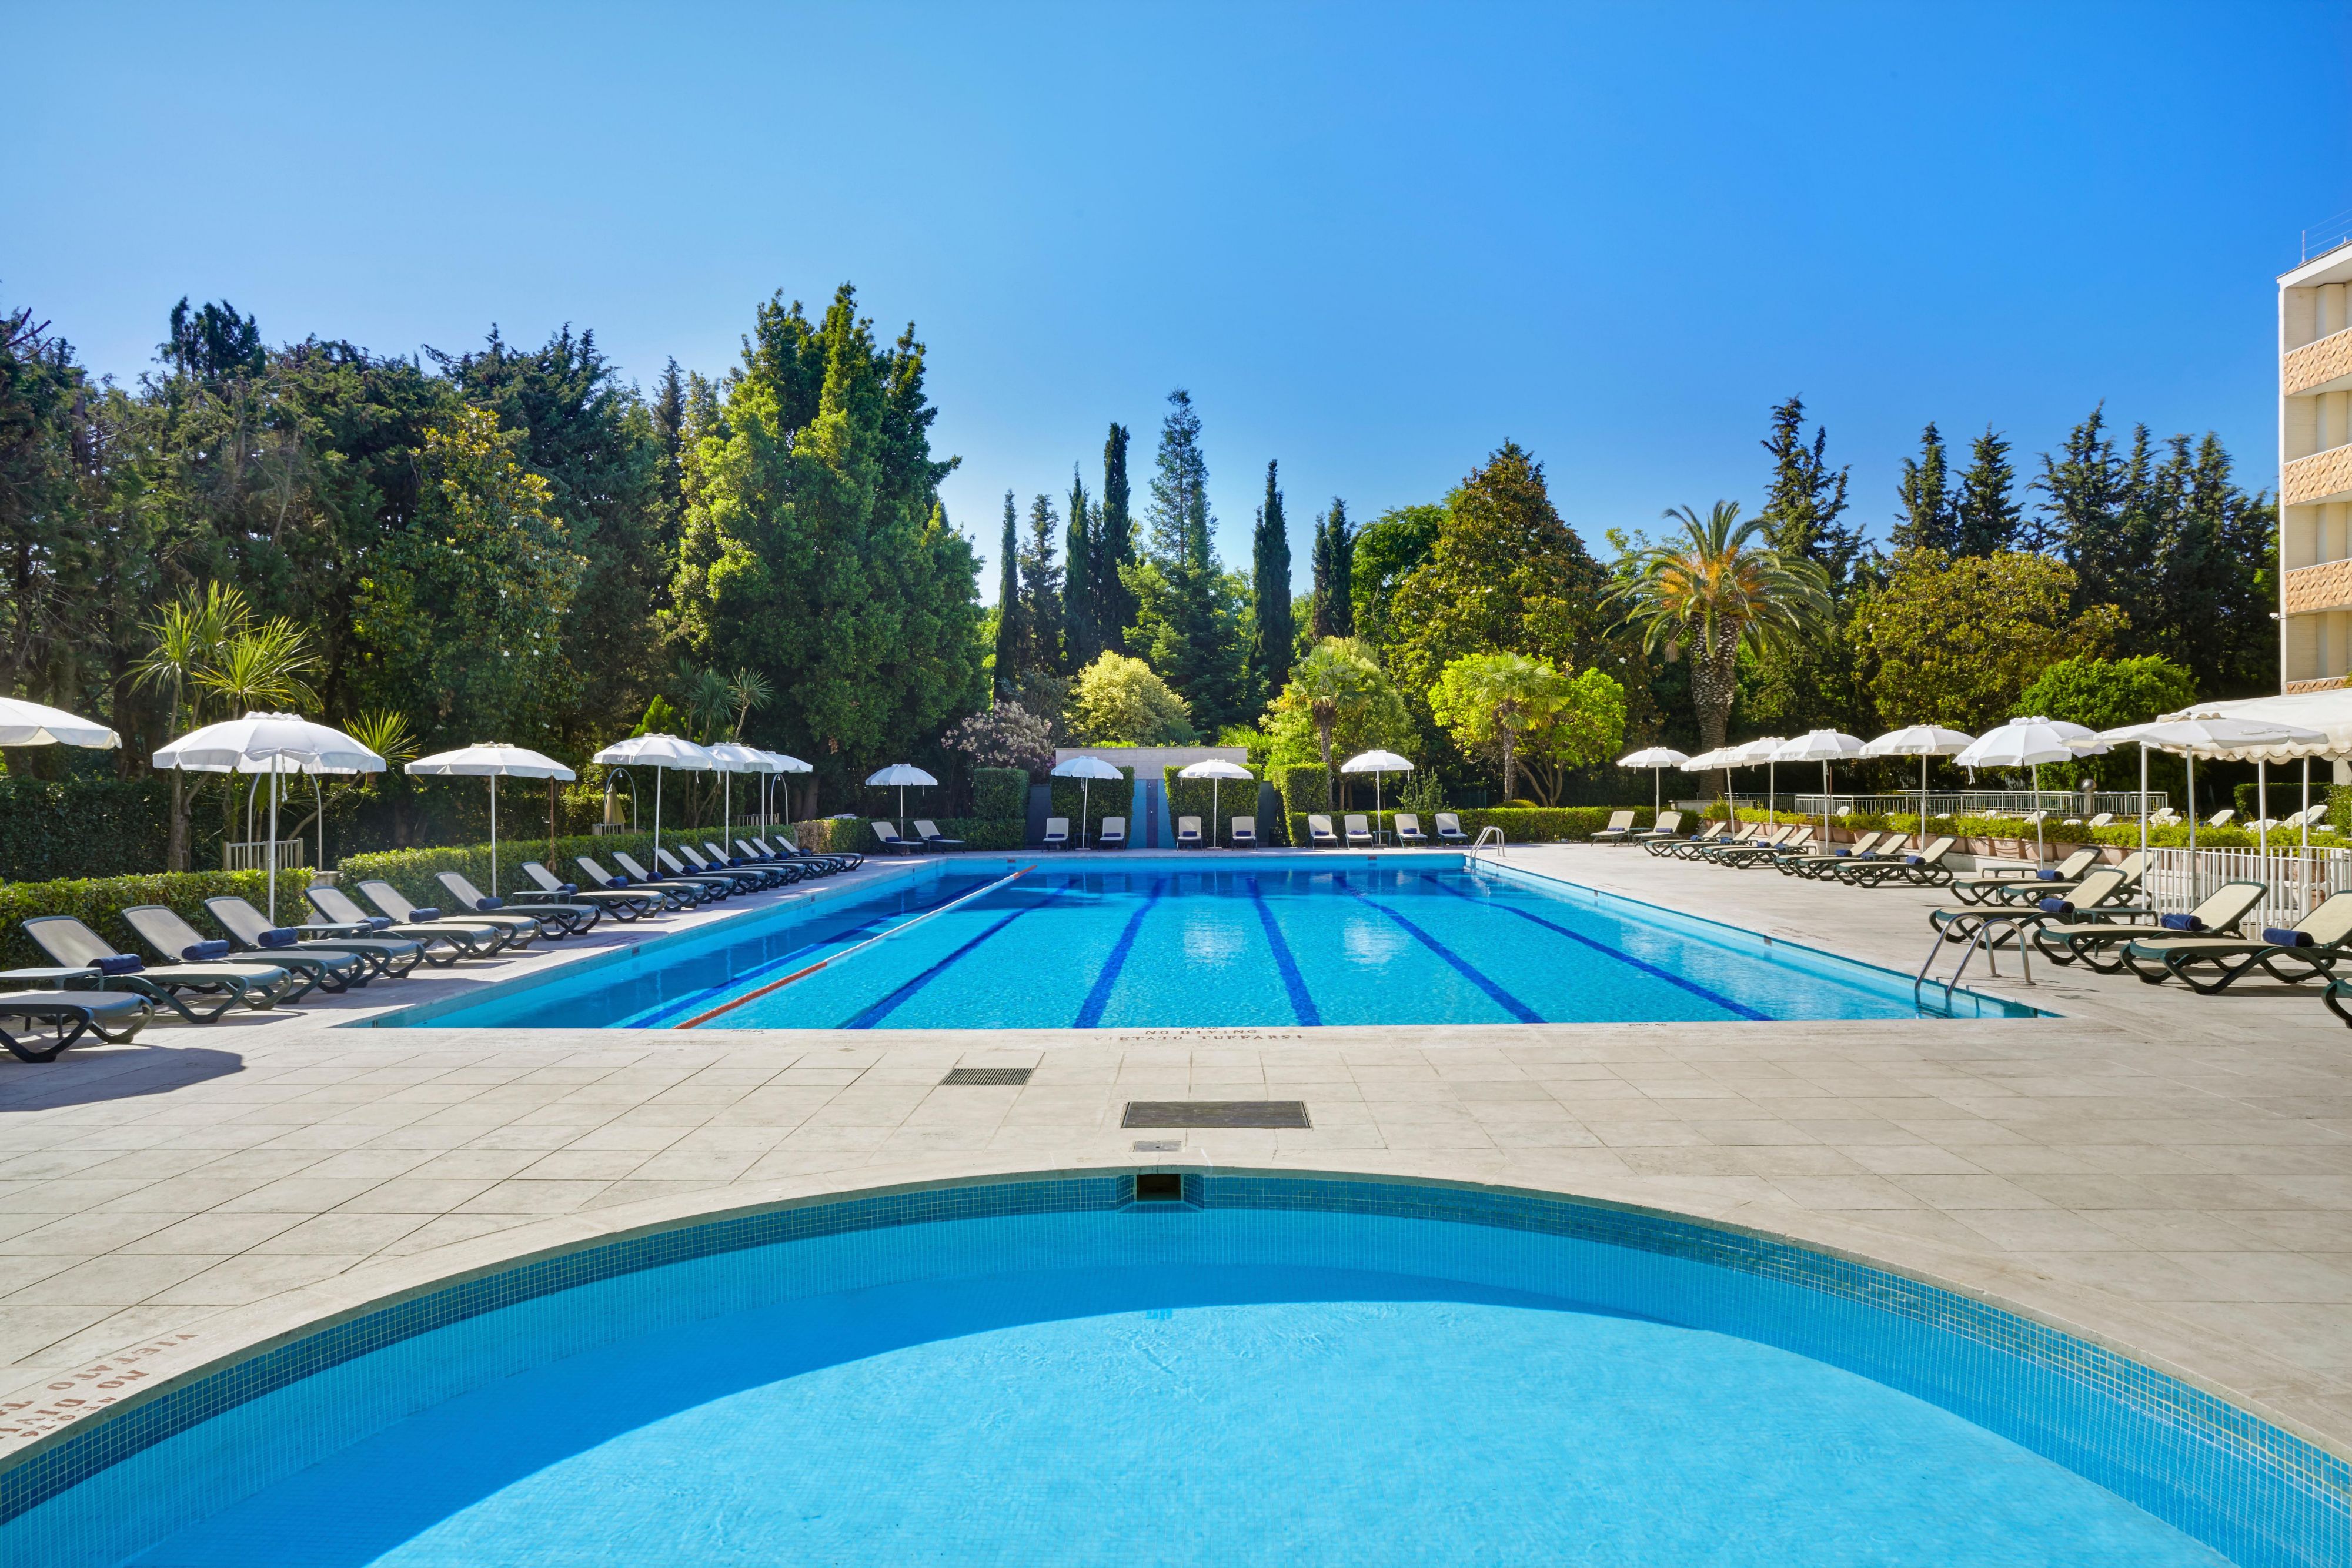 Take advantage of our seasonal swimming pool